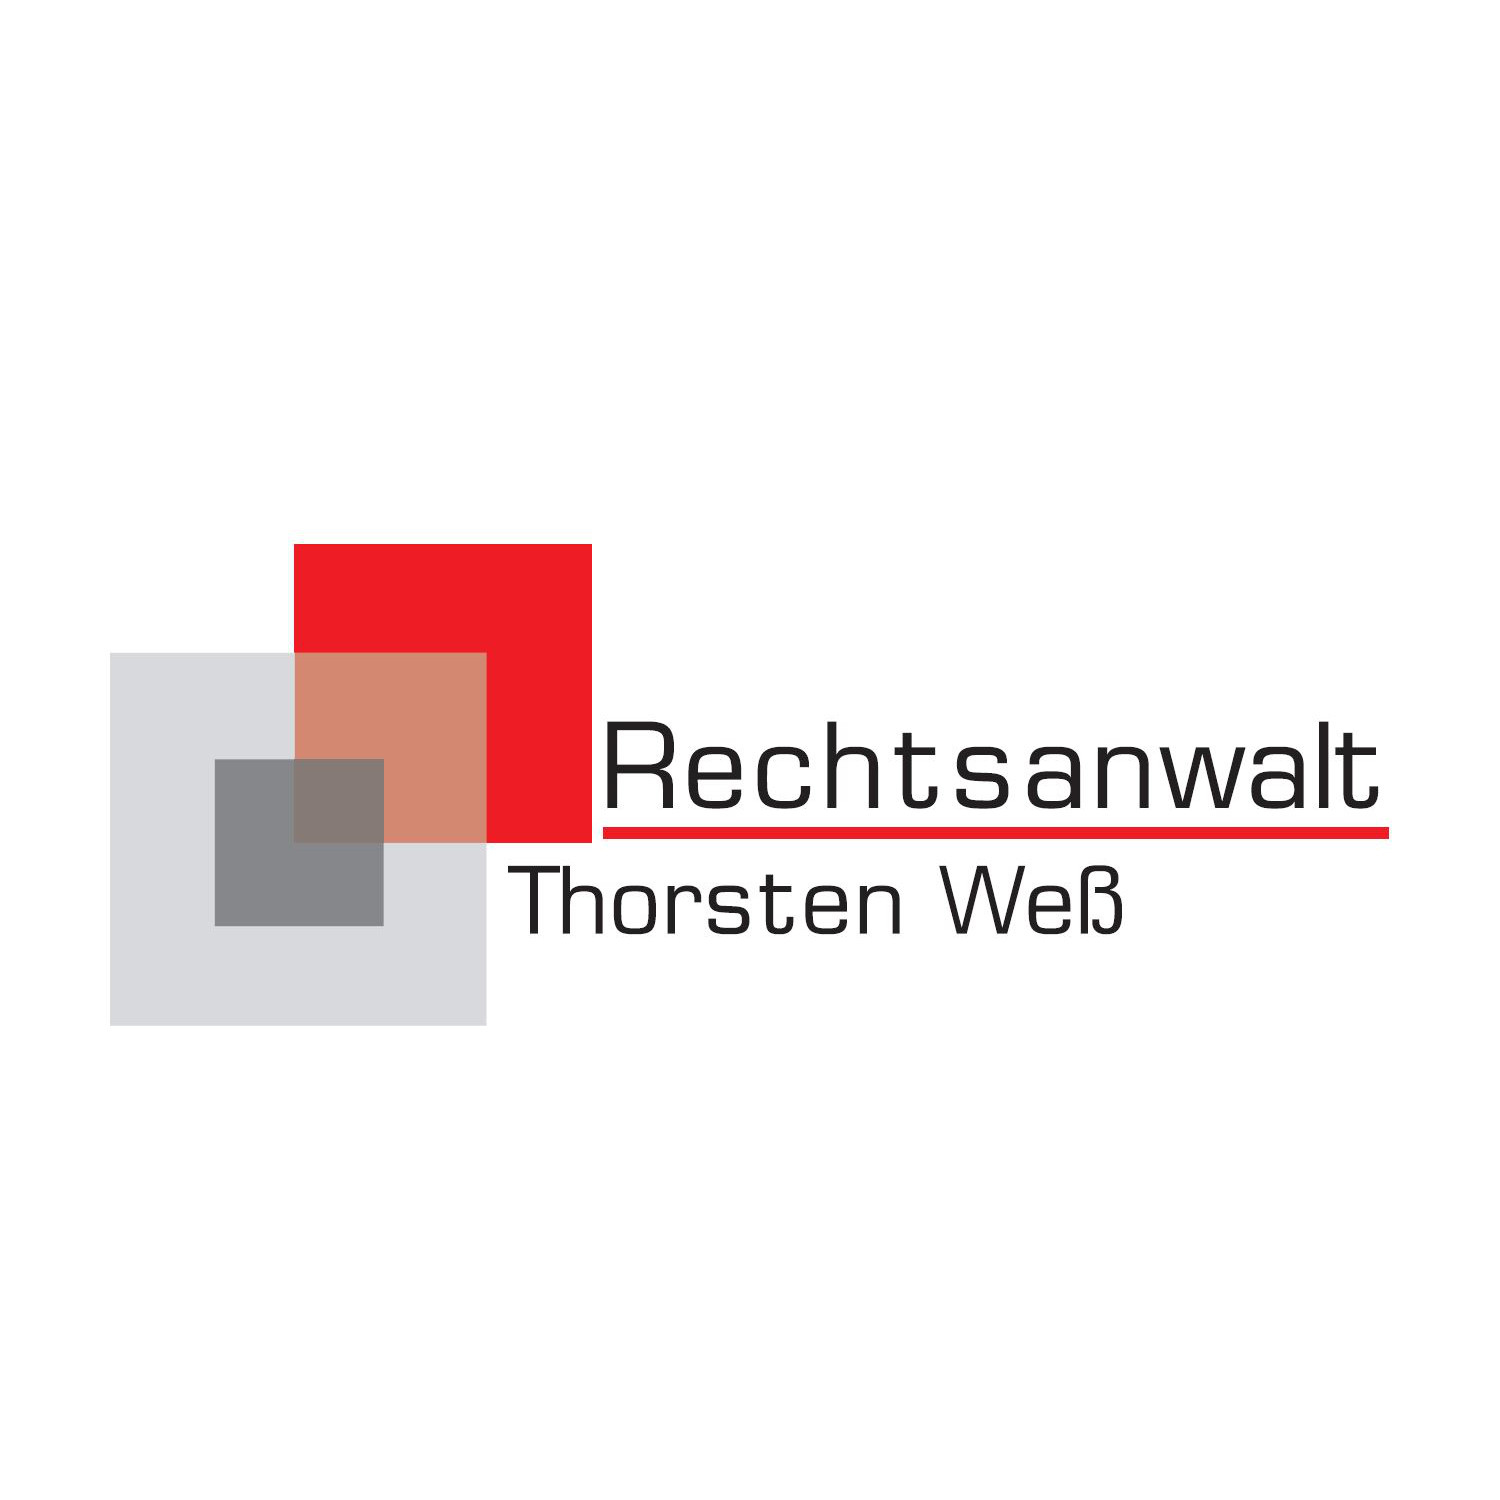 Rechtsanwalt Thorsten Weß Logo